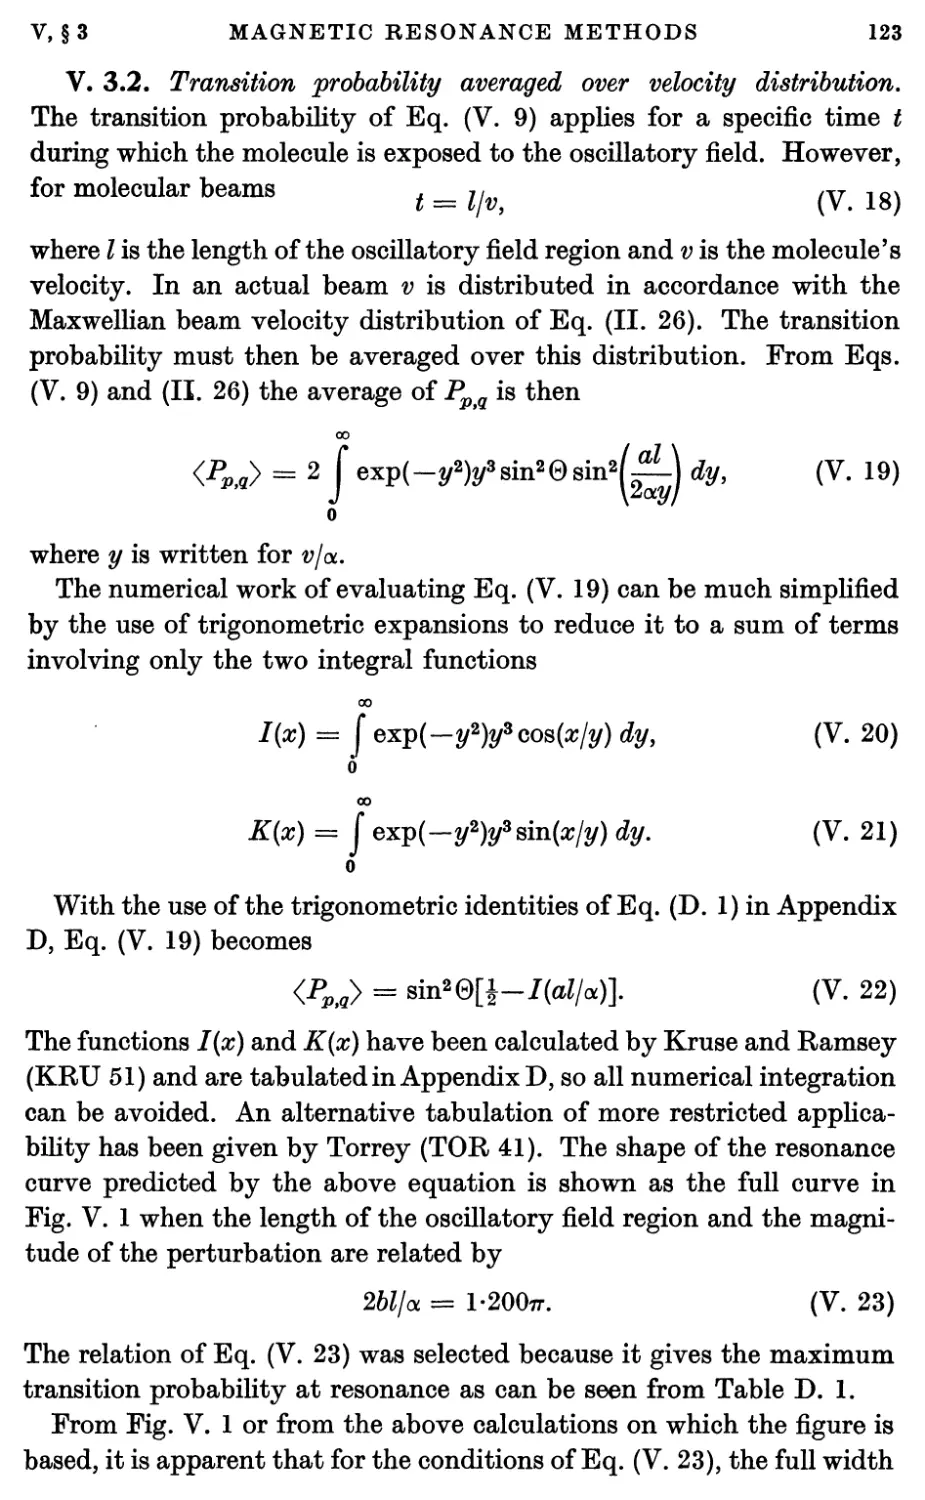 V.3.2. Transition probability averaged over velocity distribution